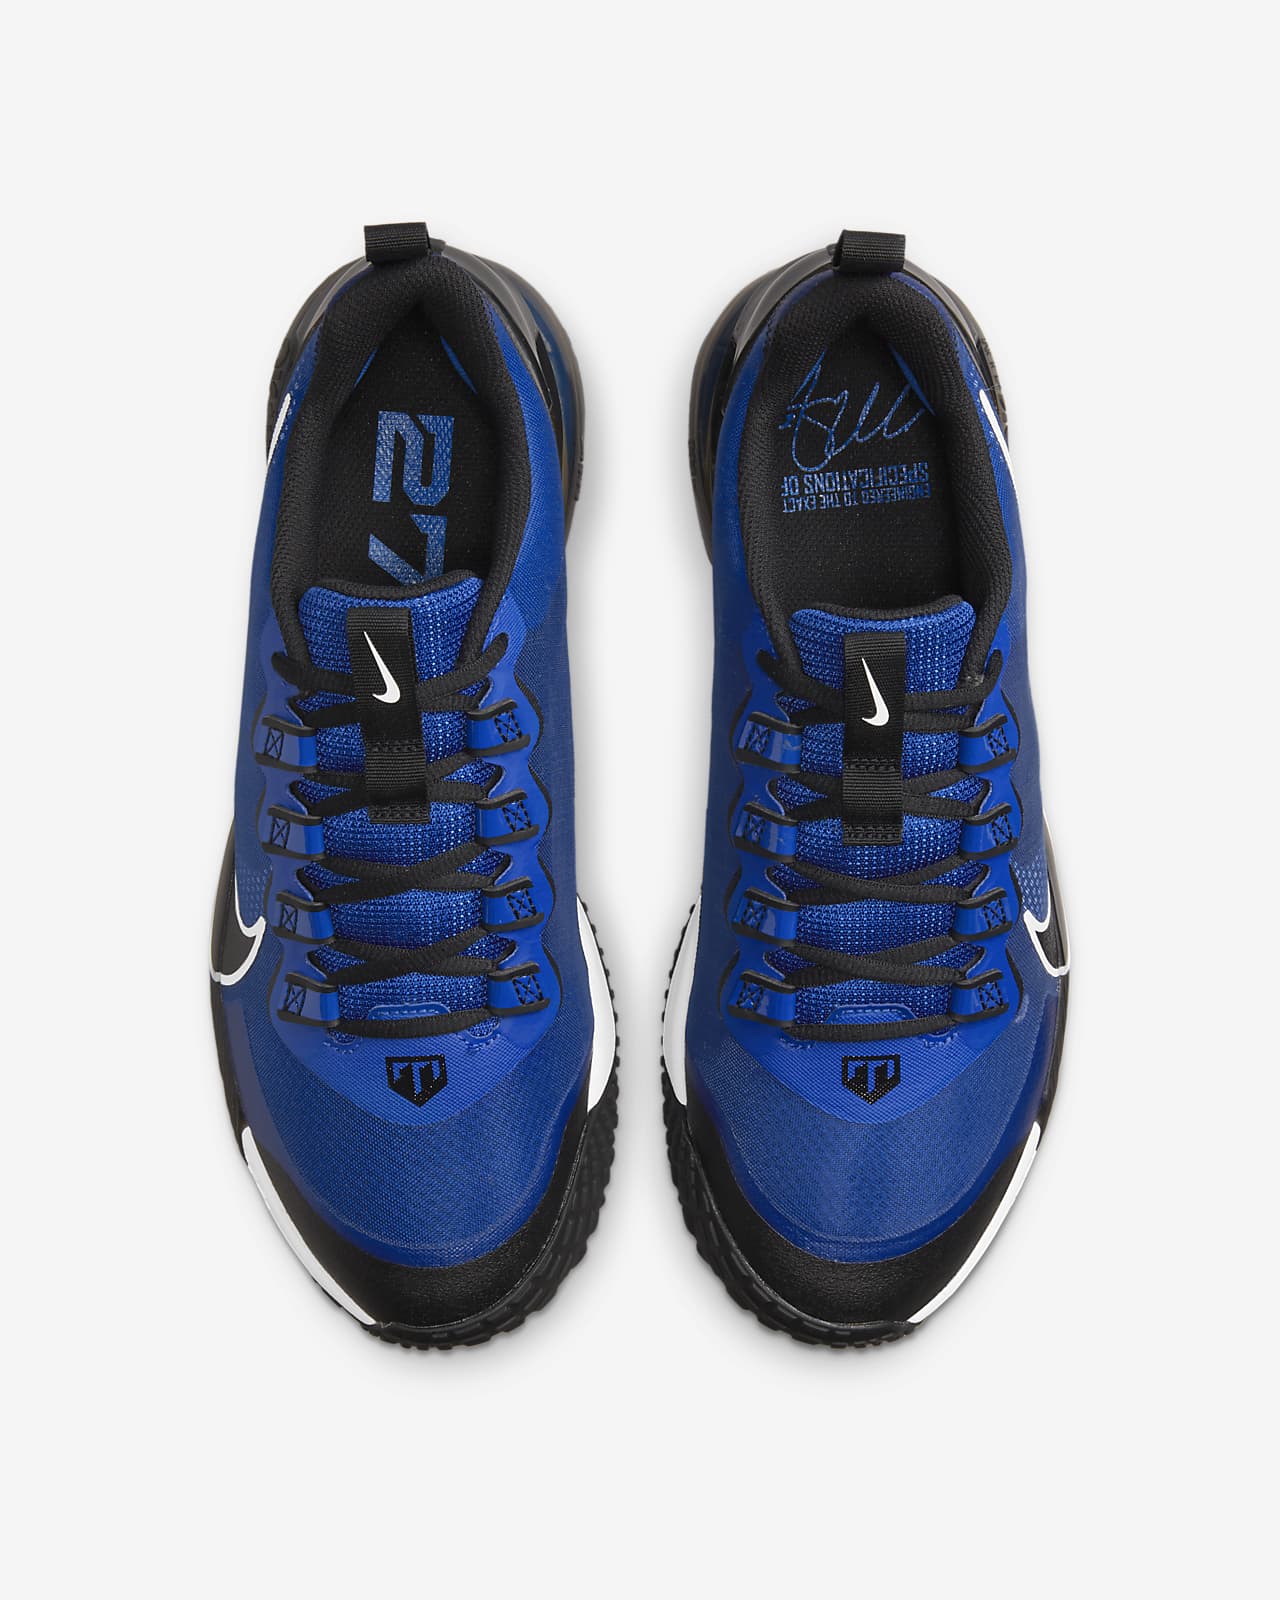 Nike Force Zoom Trout LTD Turf Men's Baseball Shoes.